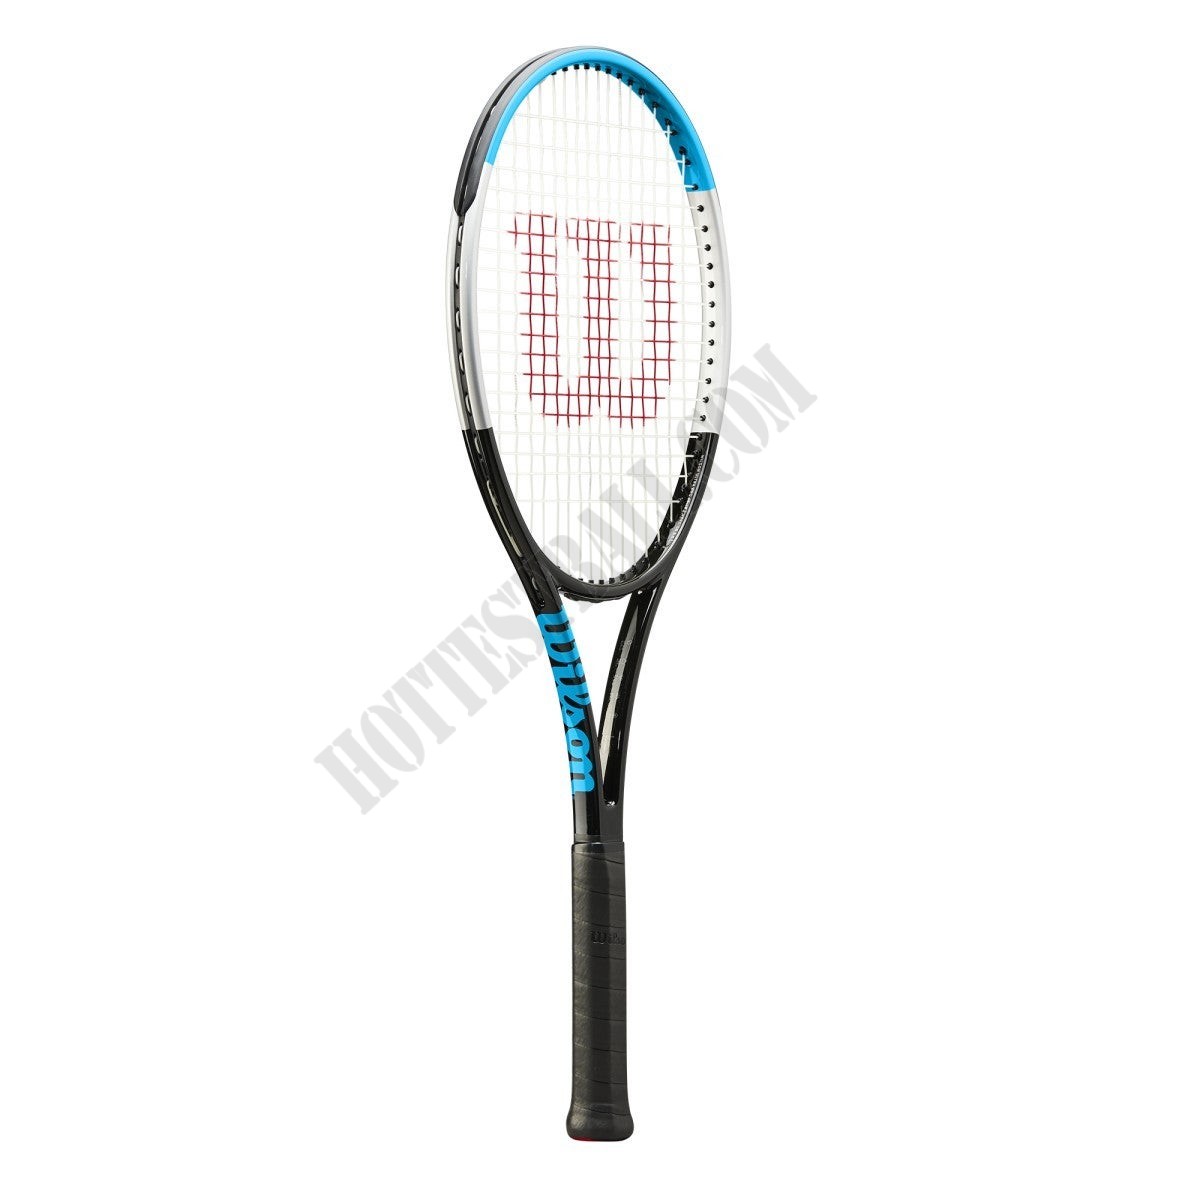 Ultra Pro (16x19) Tennis Racket - Wilson Discount Store - Ultra Pro (16x19) Tennis Racket - Wilson Discount Store